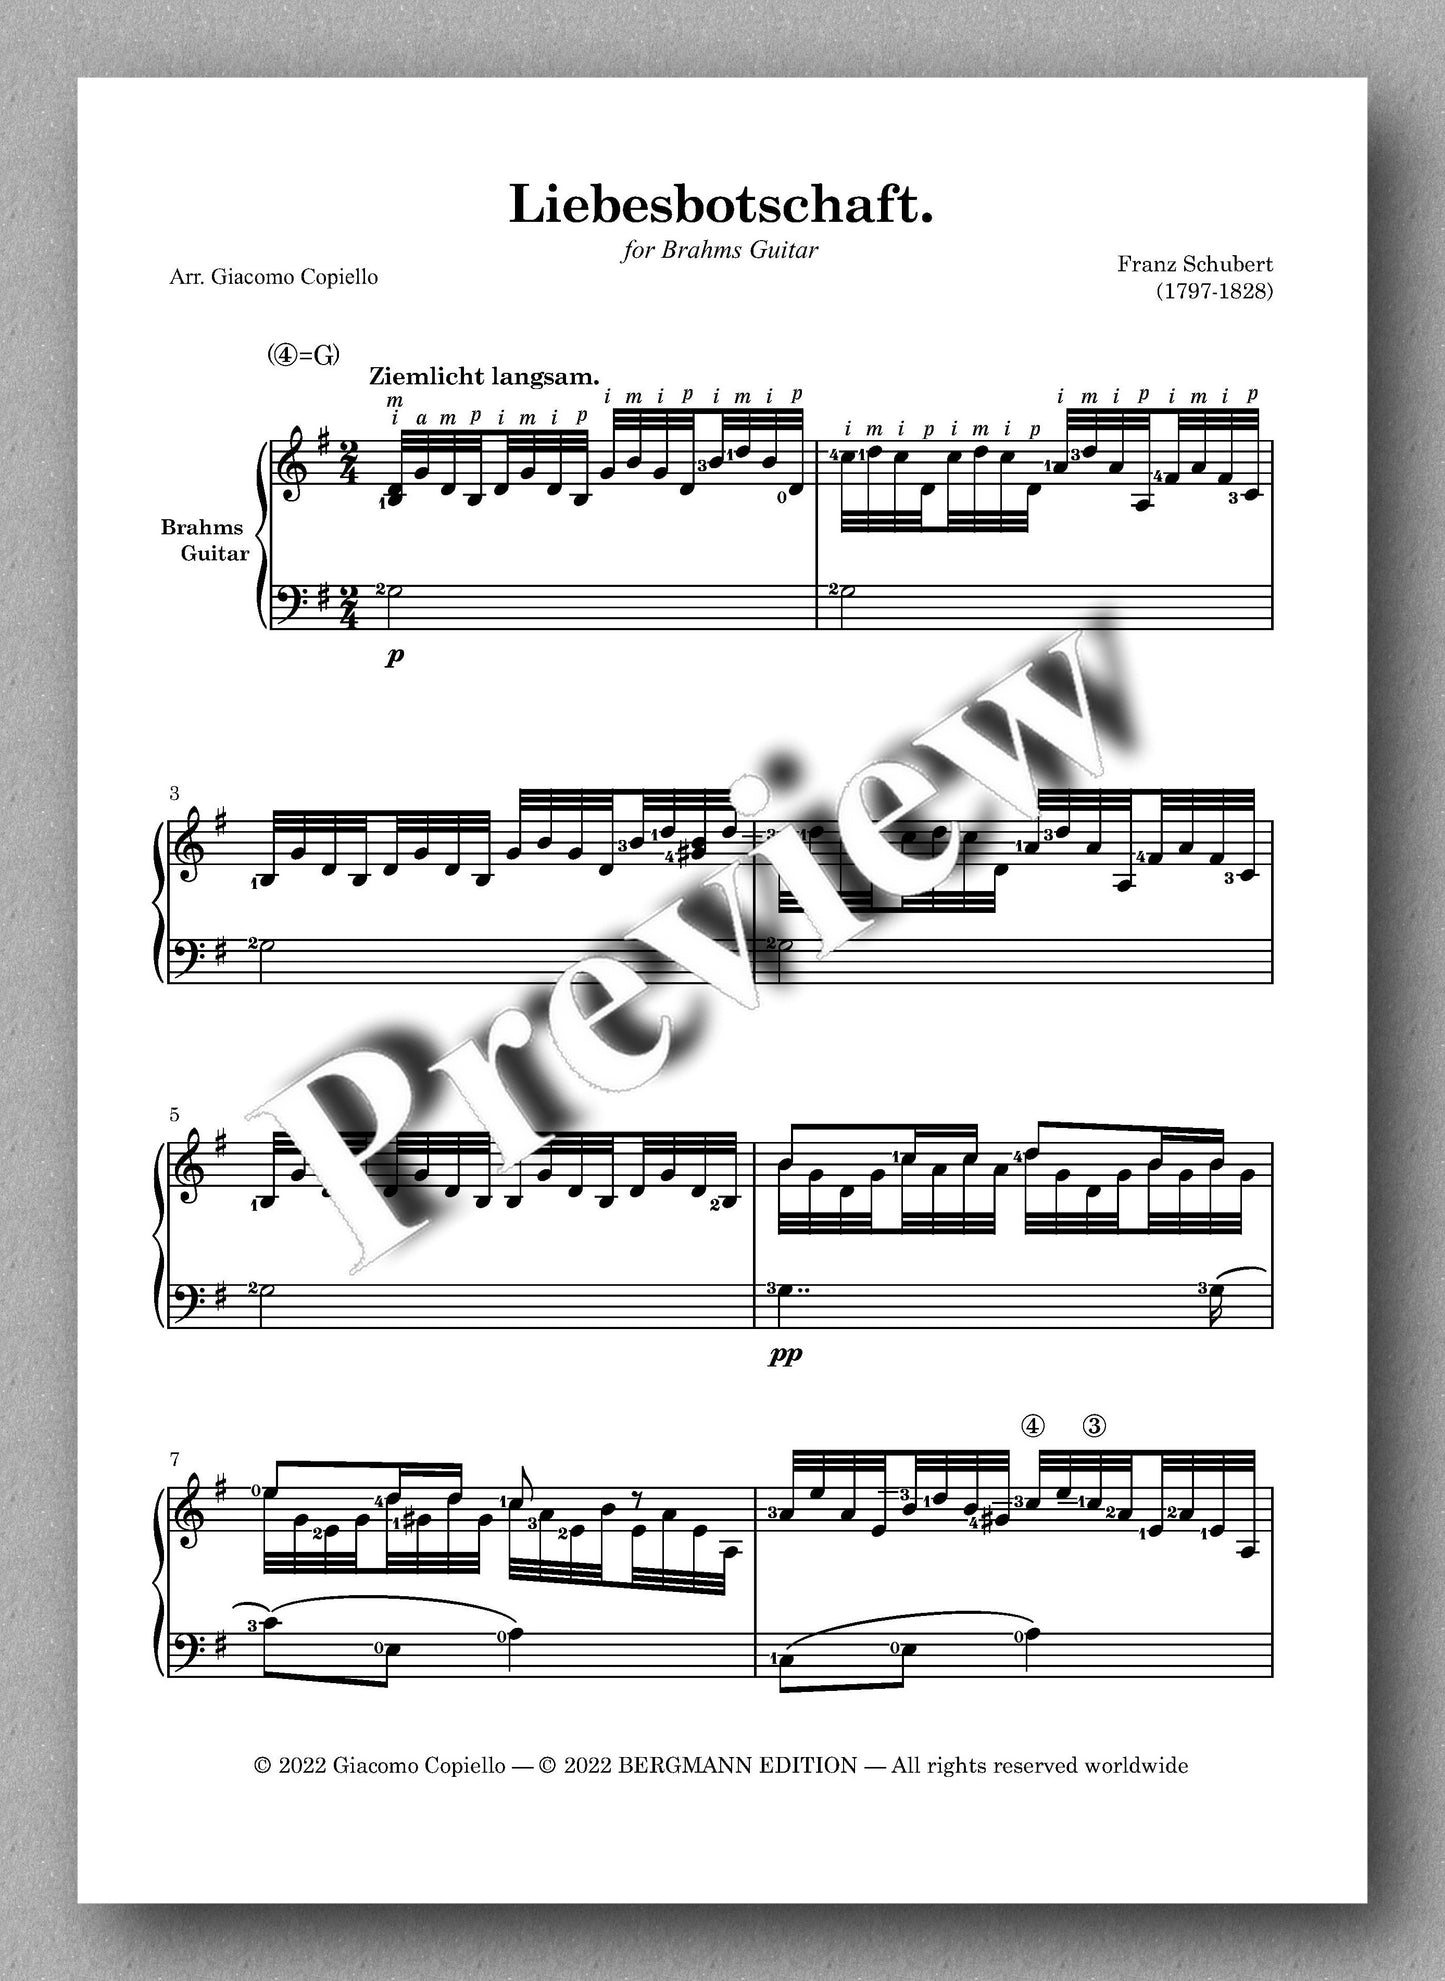 Lieder vol. 2, by Franz Schubert  - preview of the music score 2